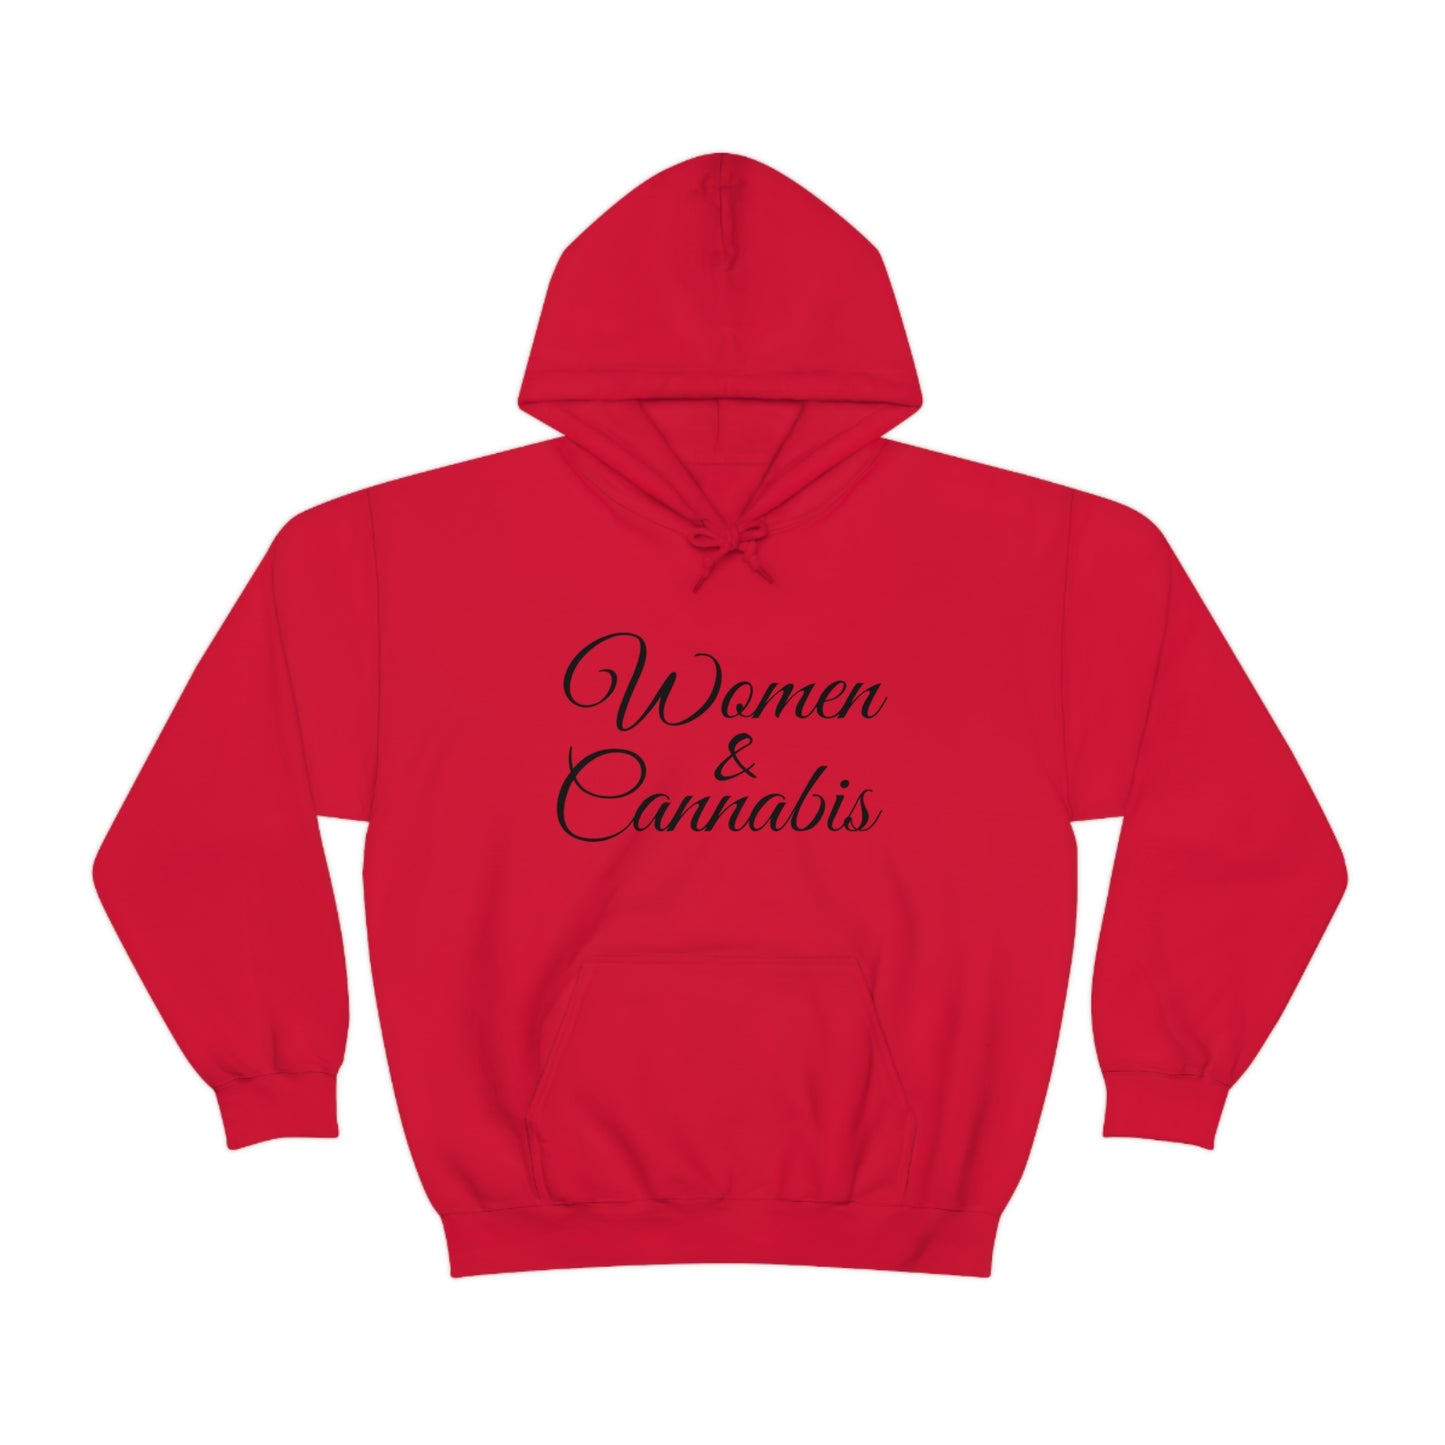 Unisex Women & Cannabis Heavy Blend™ Hooded Sweatshirt